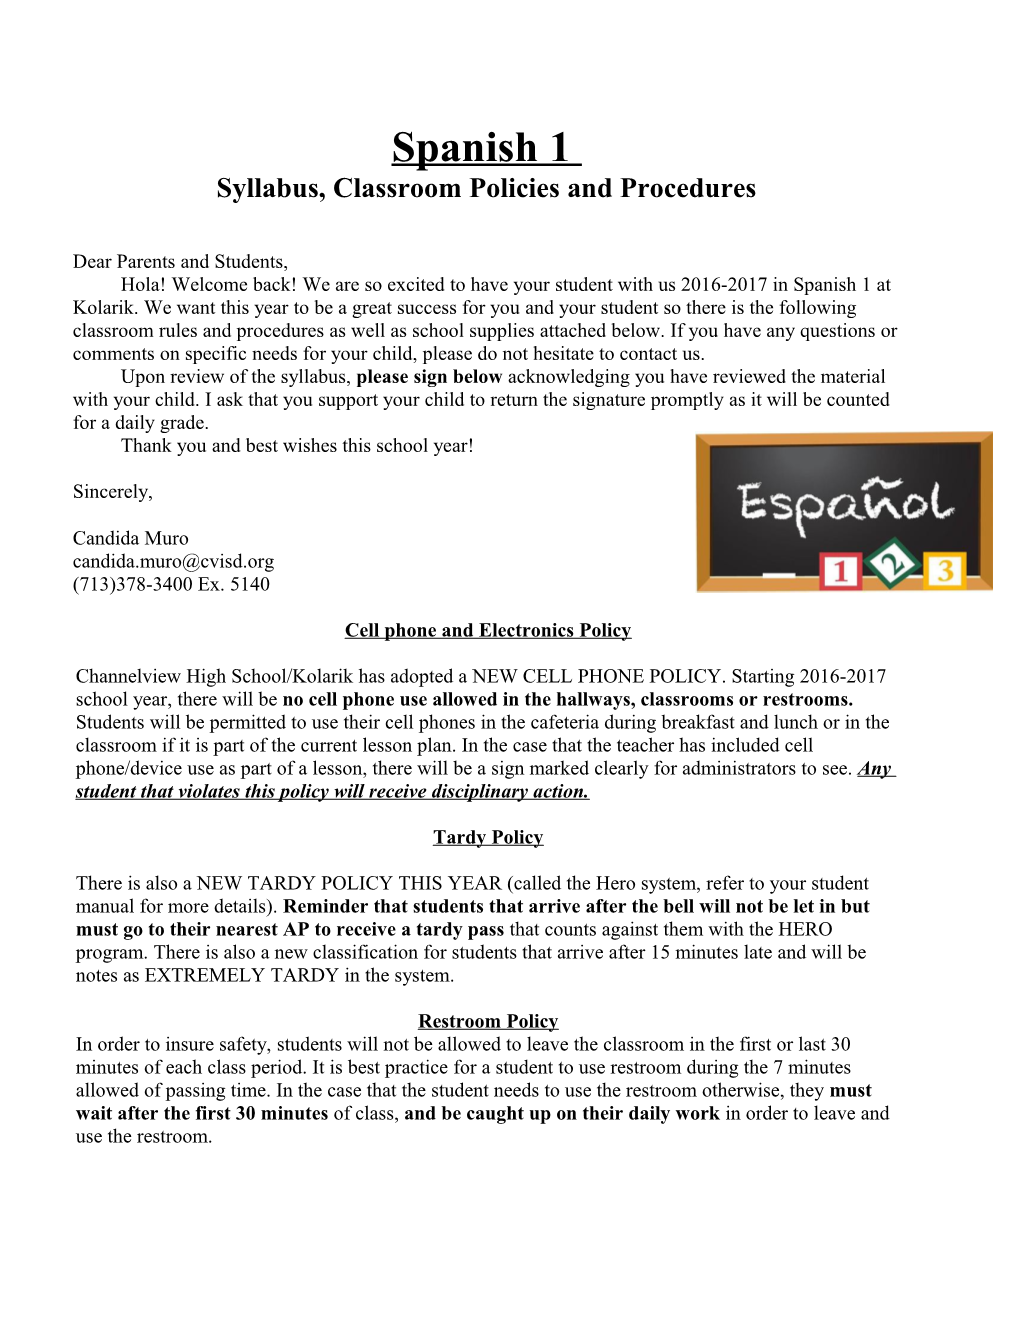 Syllabus, Classroom Policies and Procedures